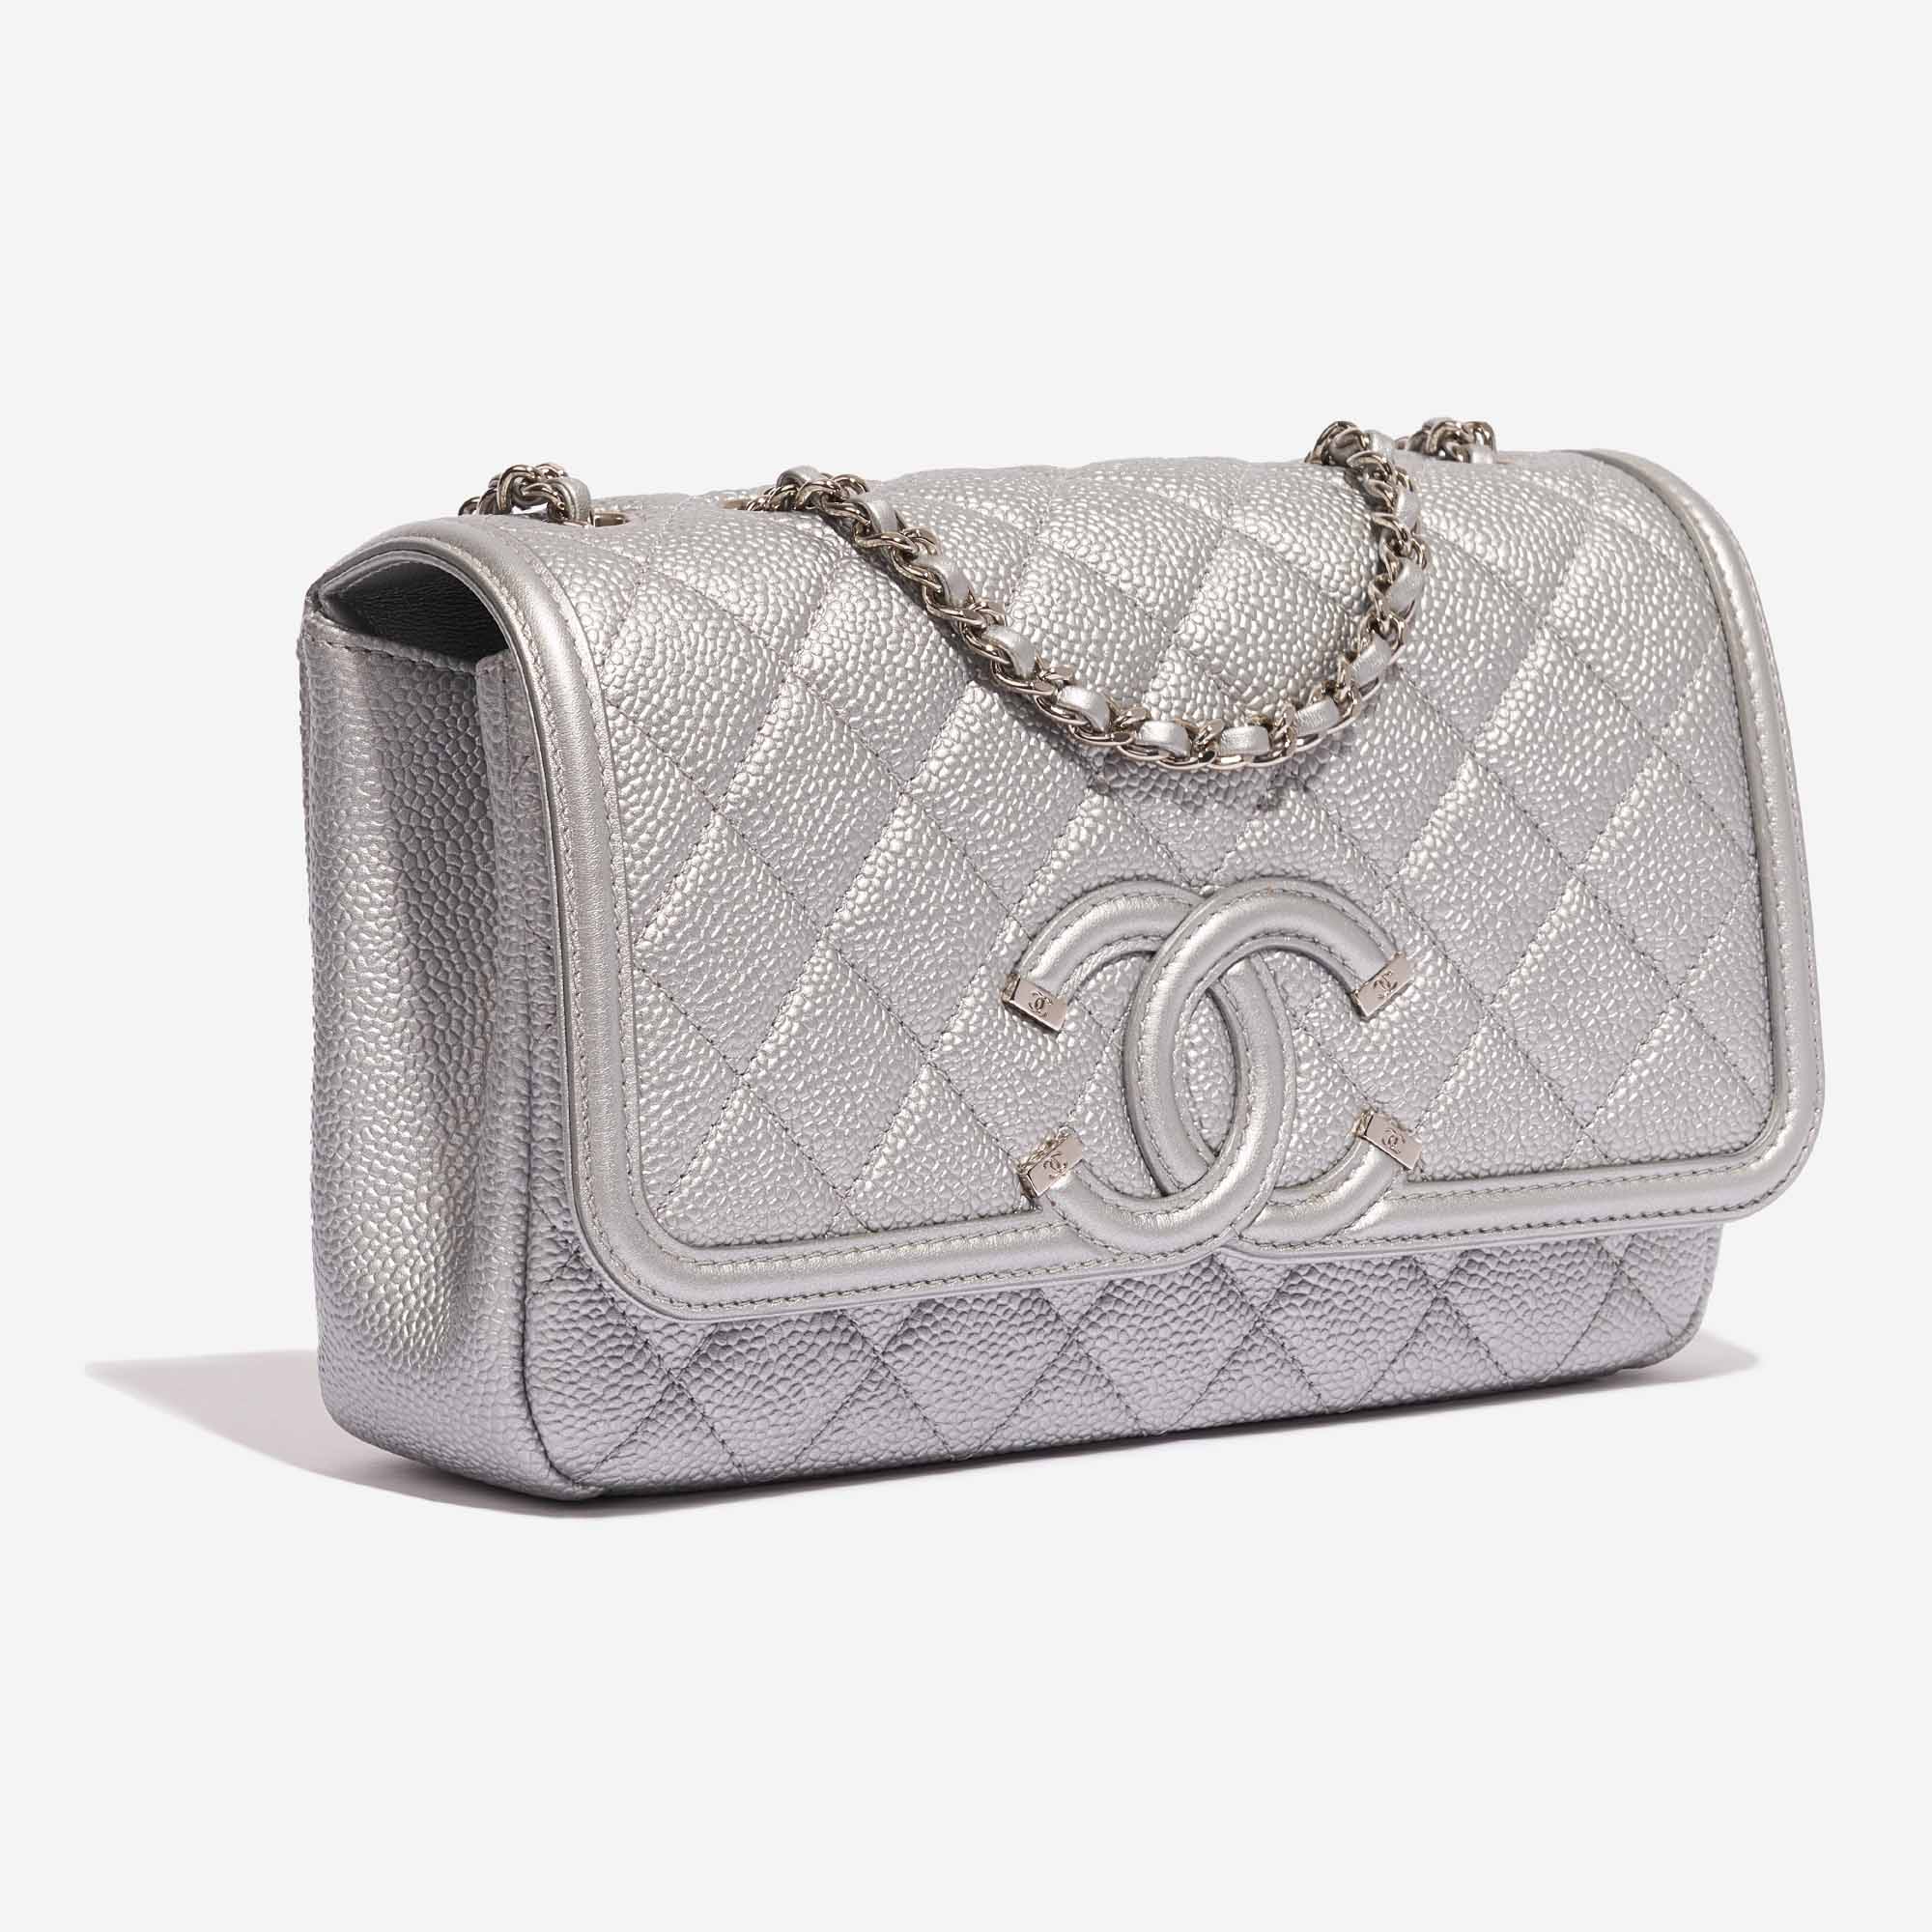 Chanel Filigree Caviar Silver CC Small Flap Bag